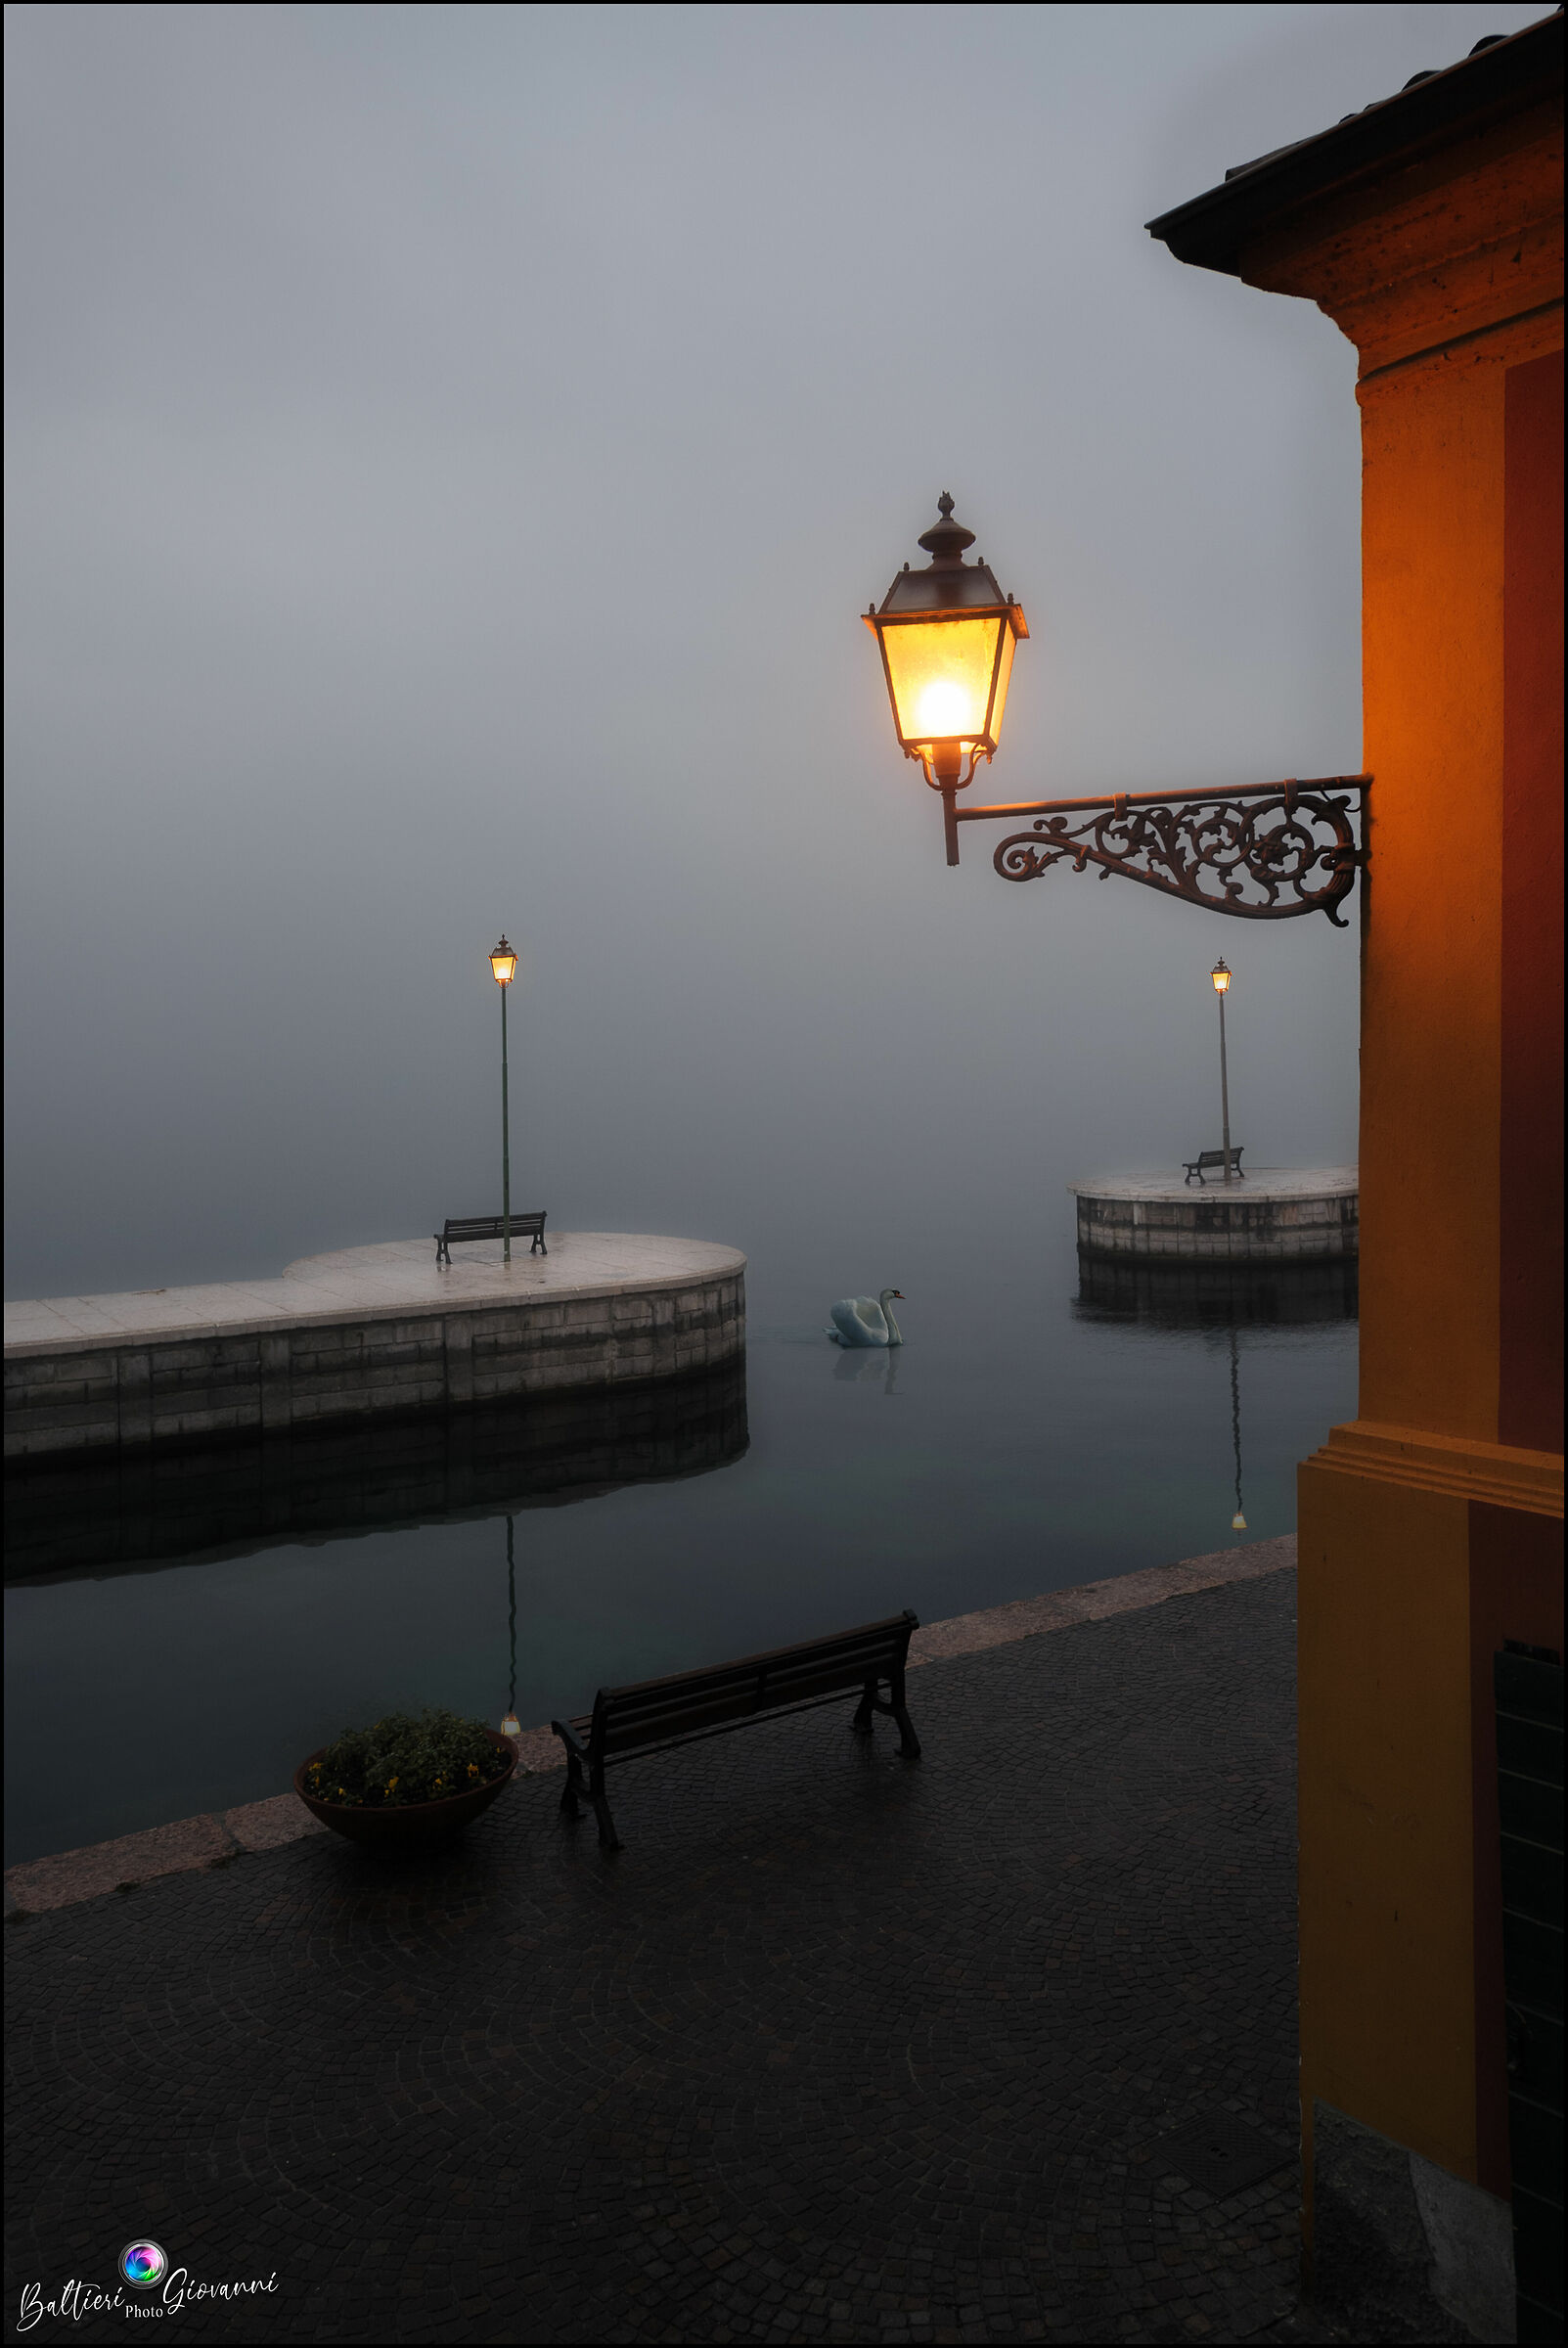 Castelletto - Lake Garda...